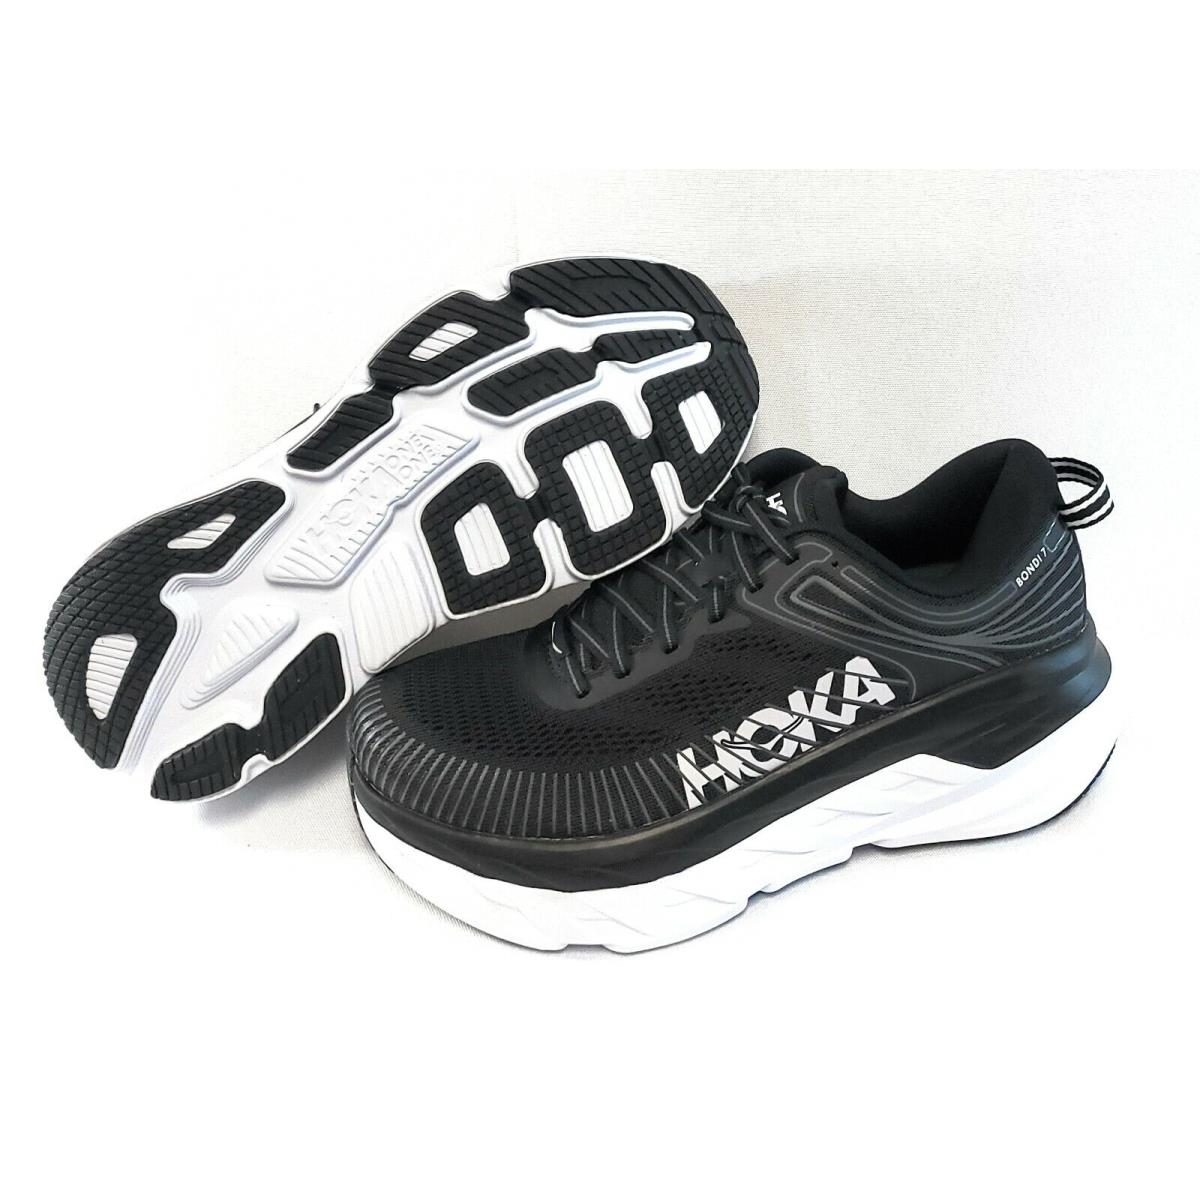 Womens Hoka One One Bondi 7 Wide 1110531 Bwht Black White Running Sneakers Shoes - Black